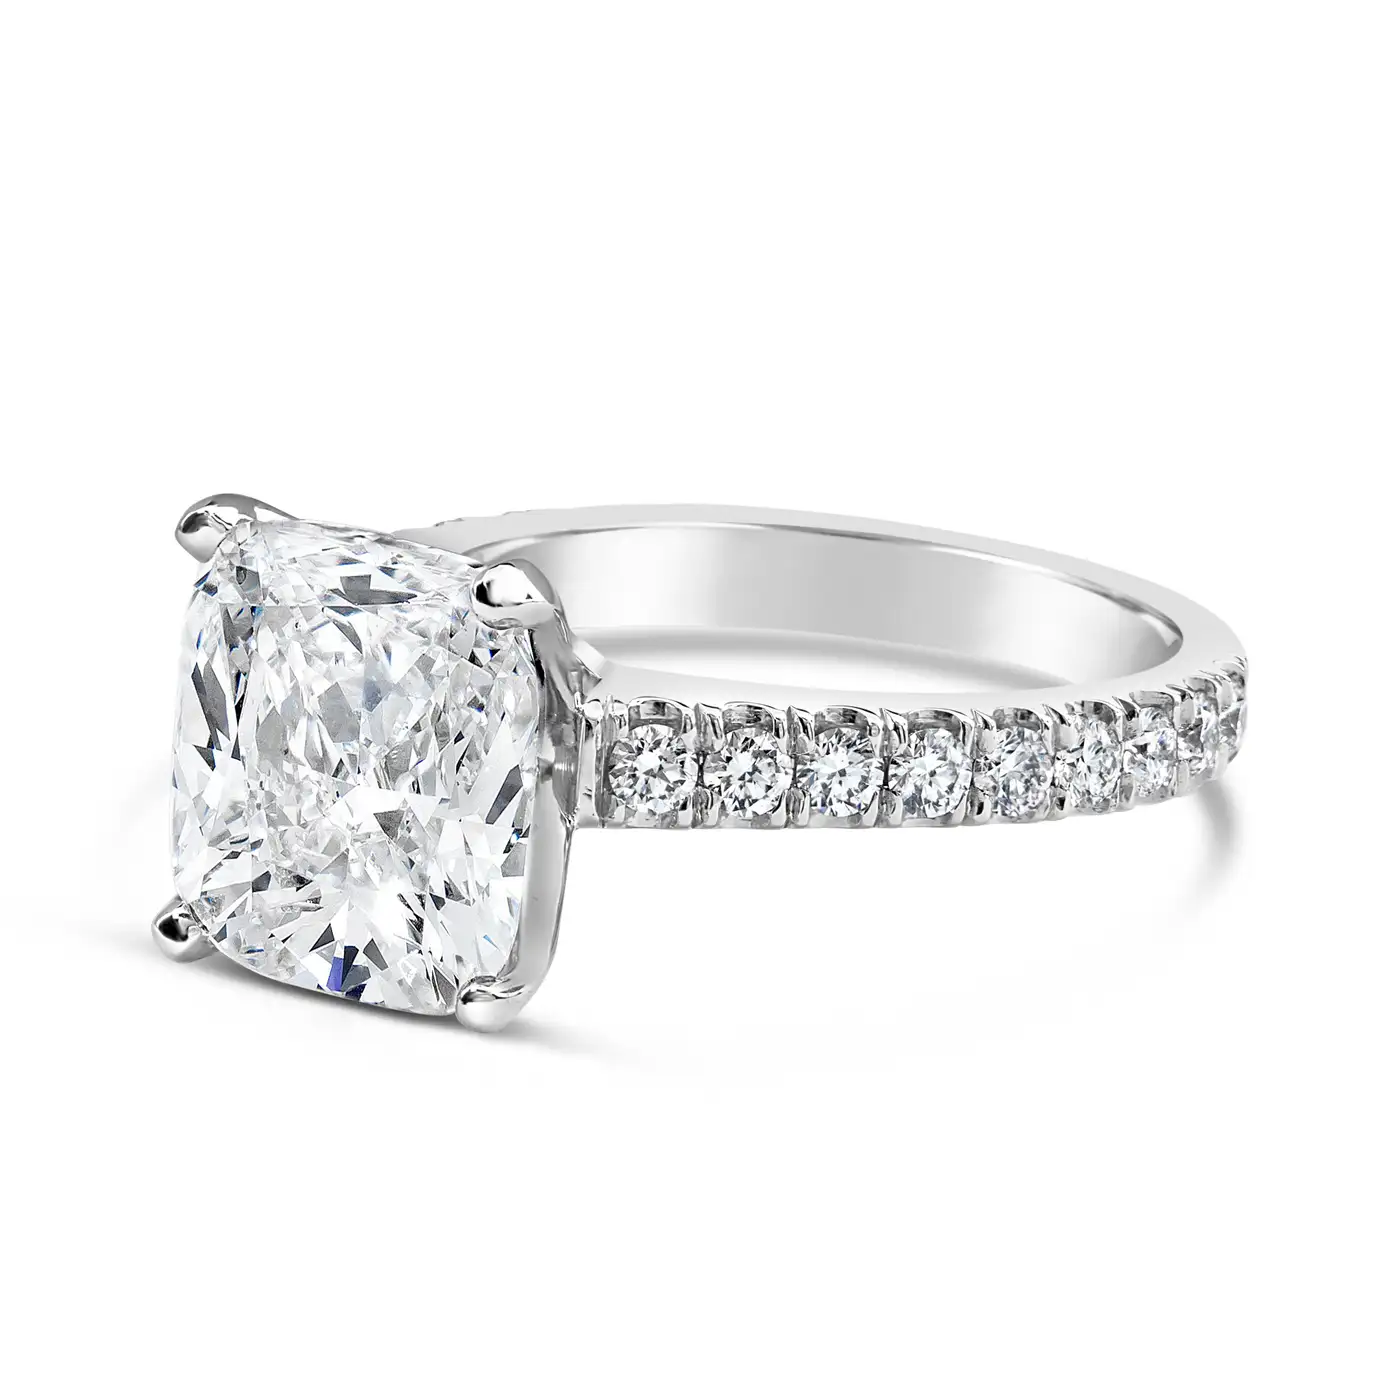 Roman-Malakov-GIA-Certified-3.25-Carats-Cushion-Cut-Diamond-Engagement-Ring-6.webp